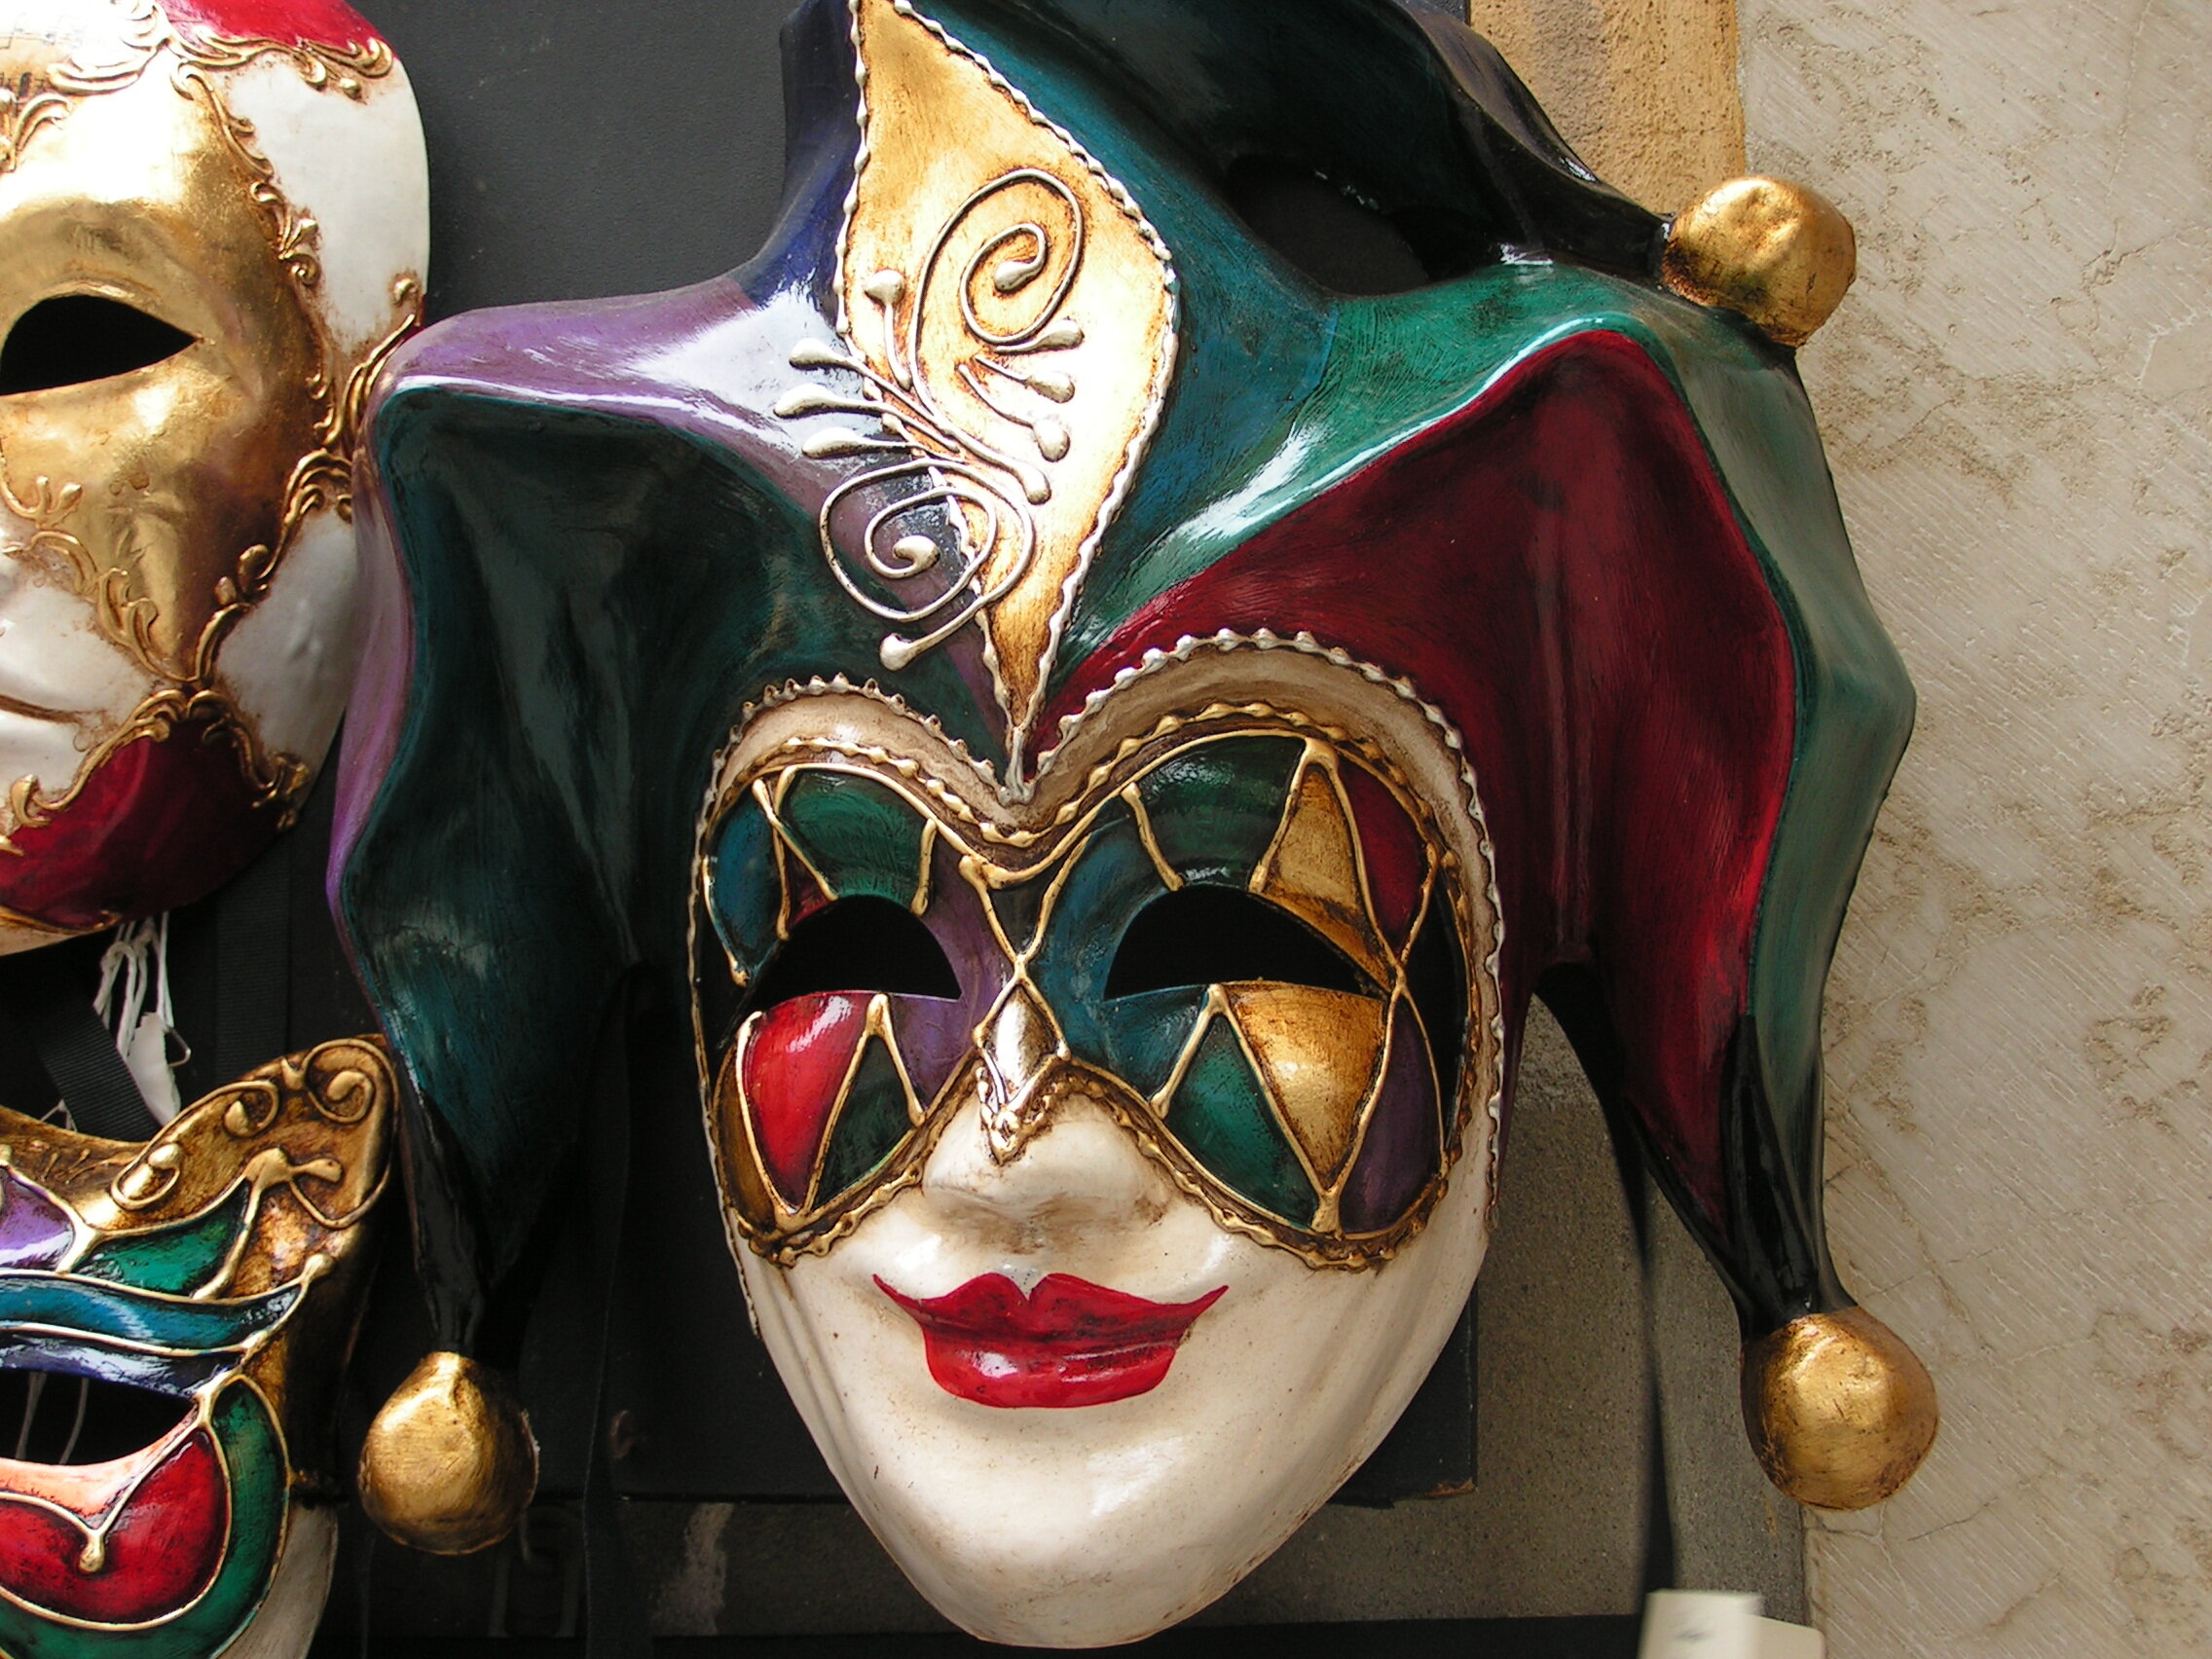 Арлекин маска 5 выпуск. Маска Арлекина Венеция 17 век. Венеция маскарад с шутами. Венецианская маска Маттачино. Маски венецианские карнавальные.